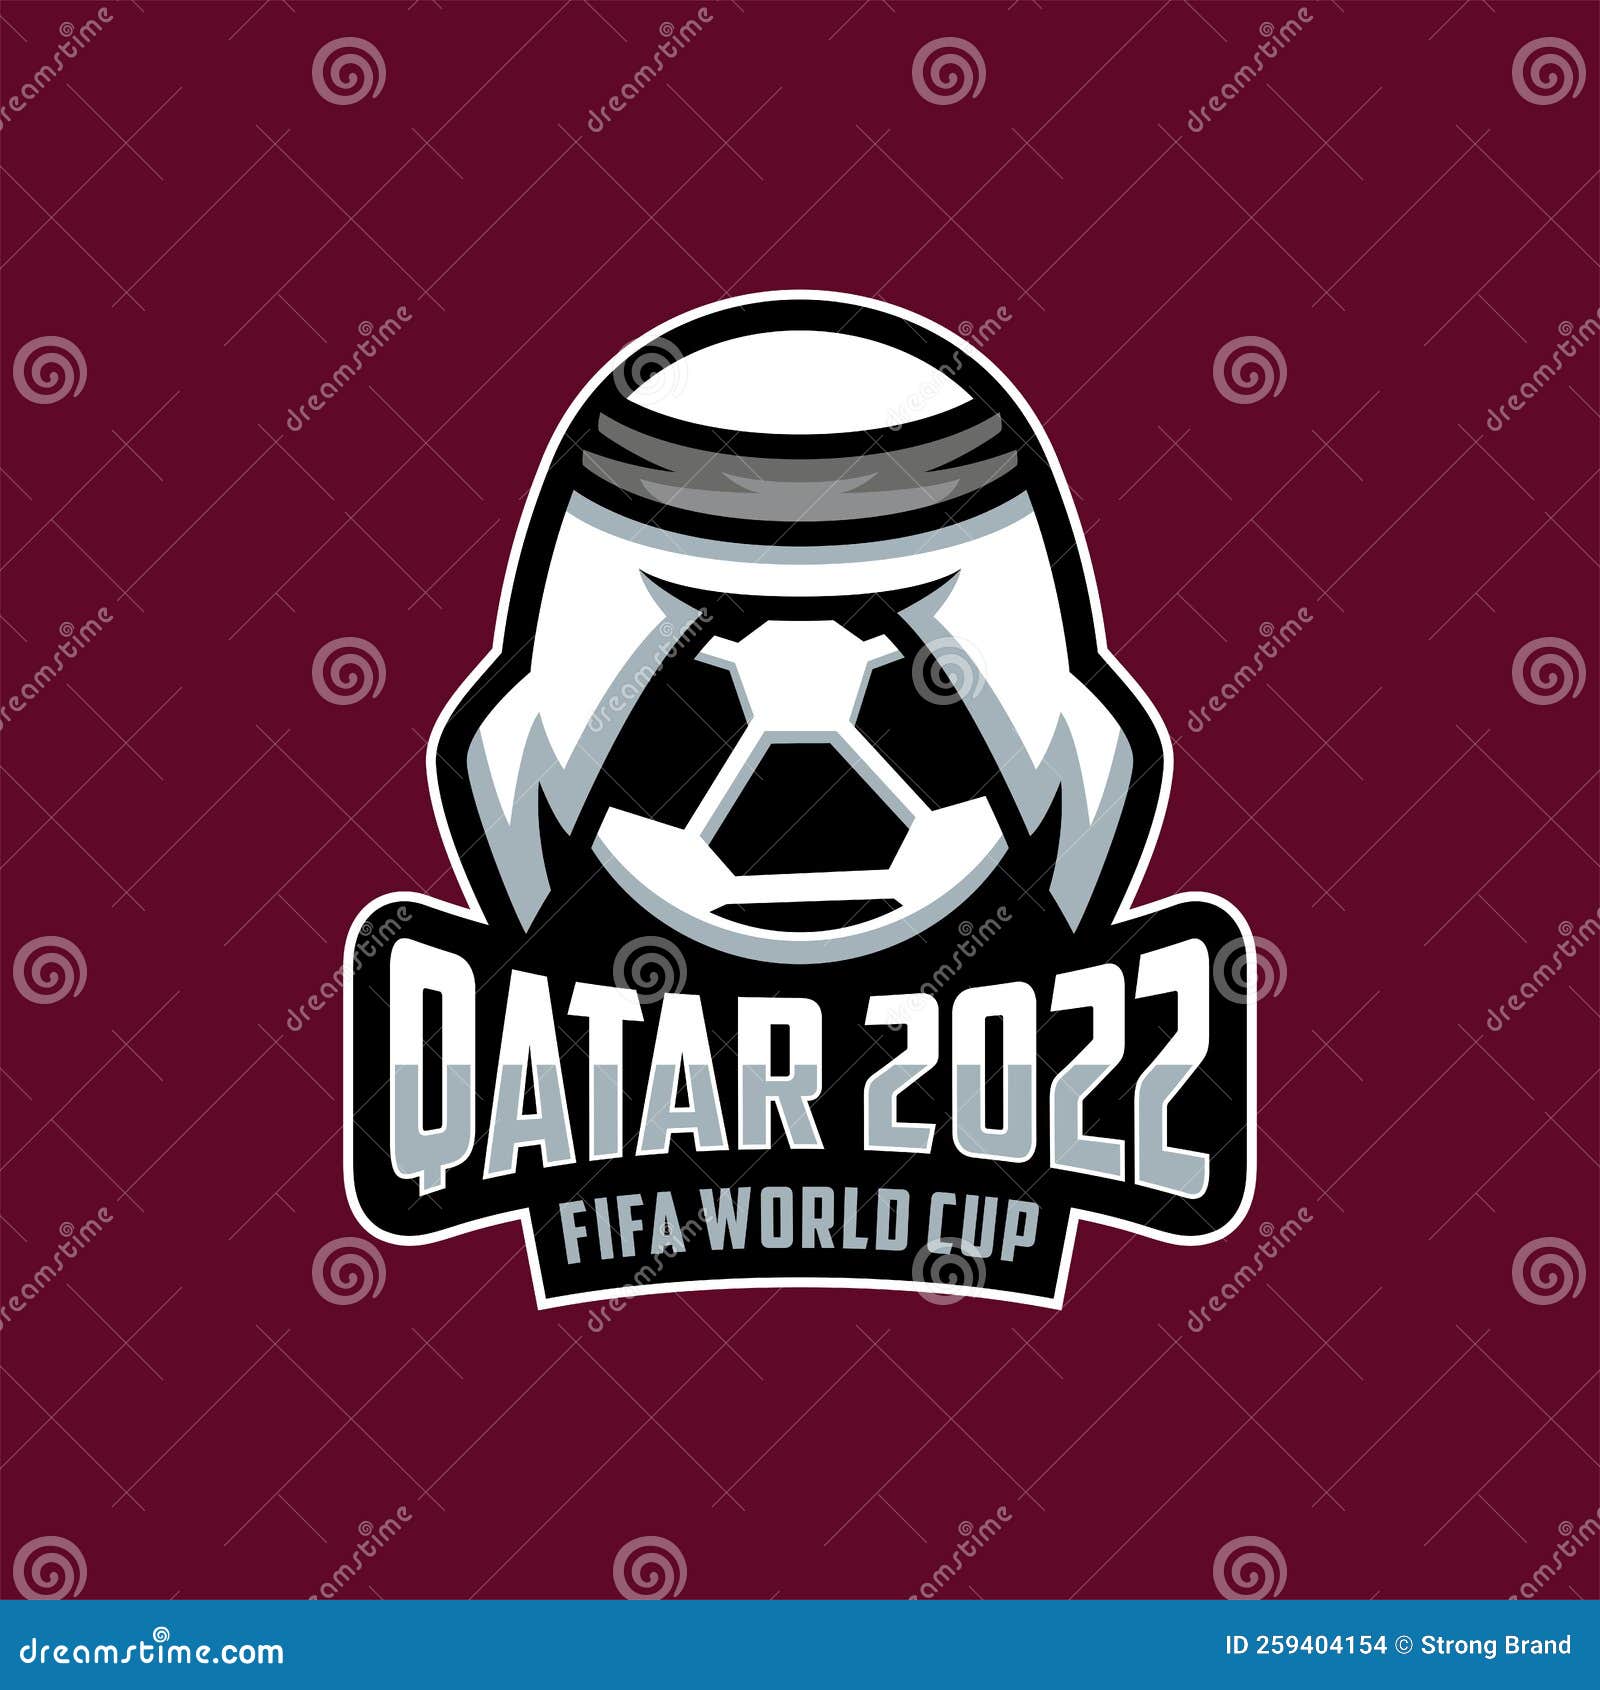 Mascot Fifa World Cup Qatar 2022 official Logo And Ballon Symbol